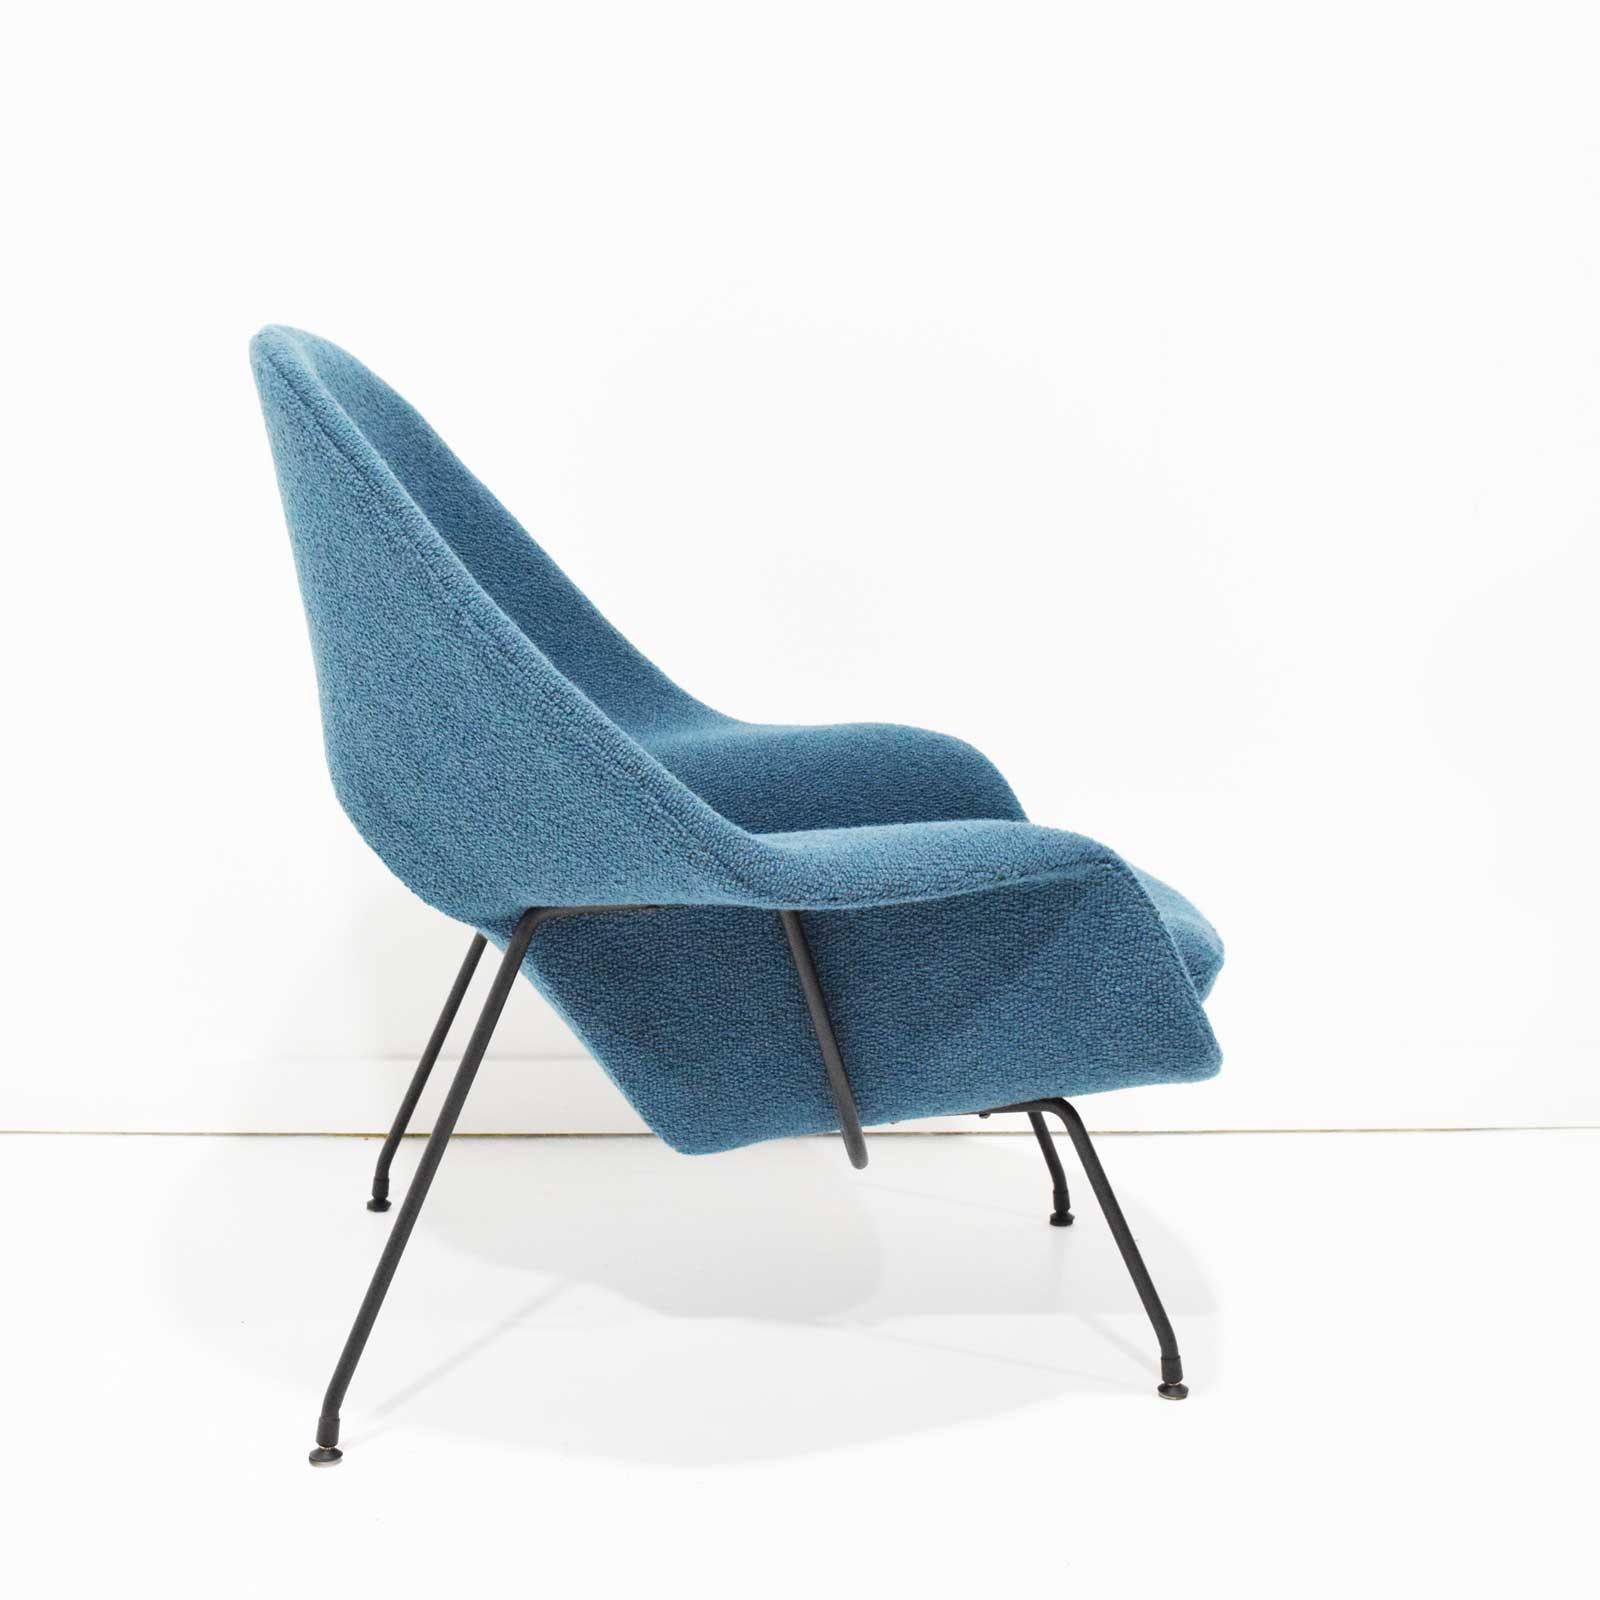 Mid-Century Modern Eero Saarinen for Knoll Early Womb Chair in new Larsen Upholstery